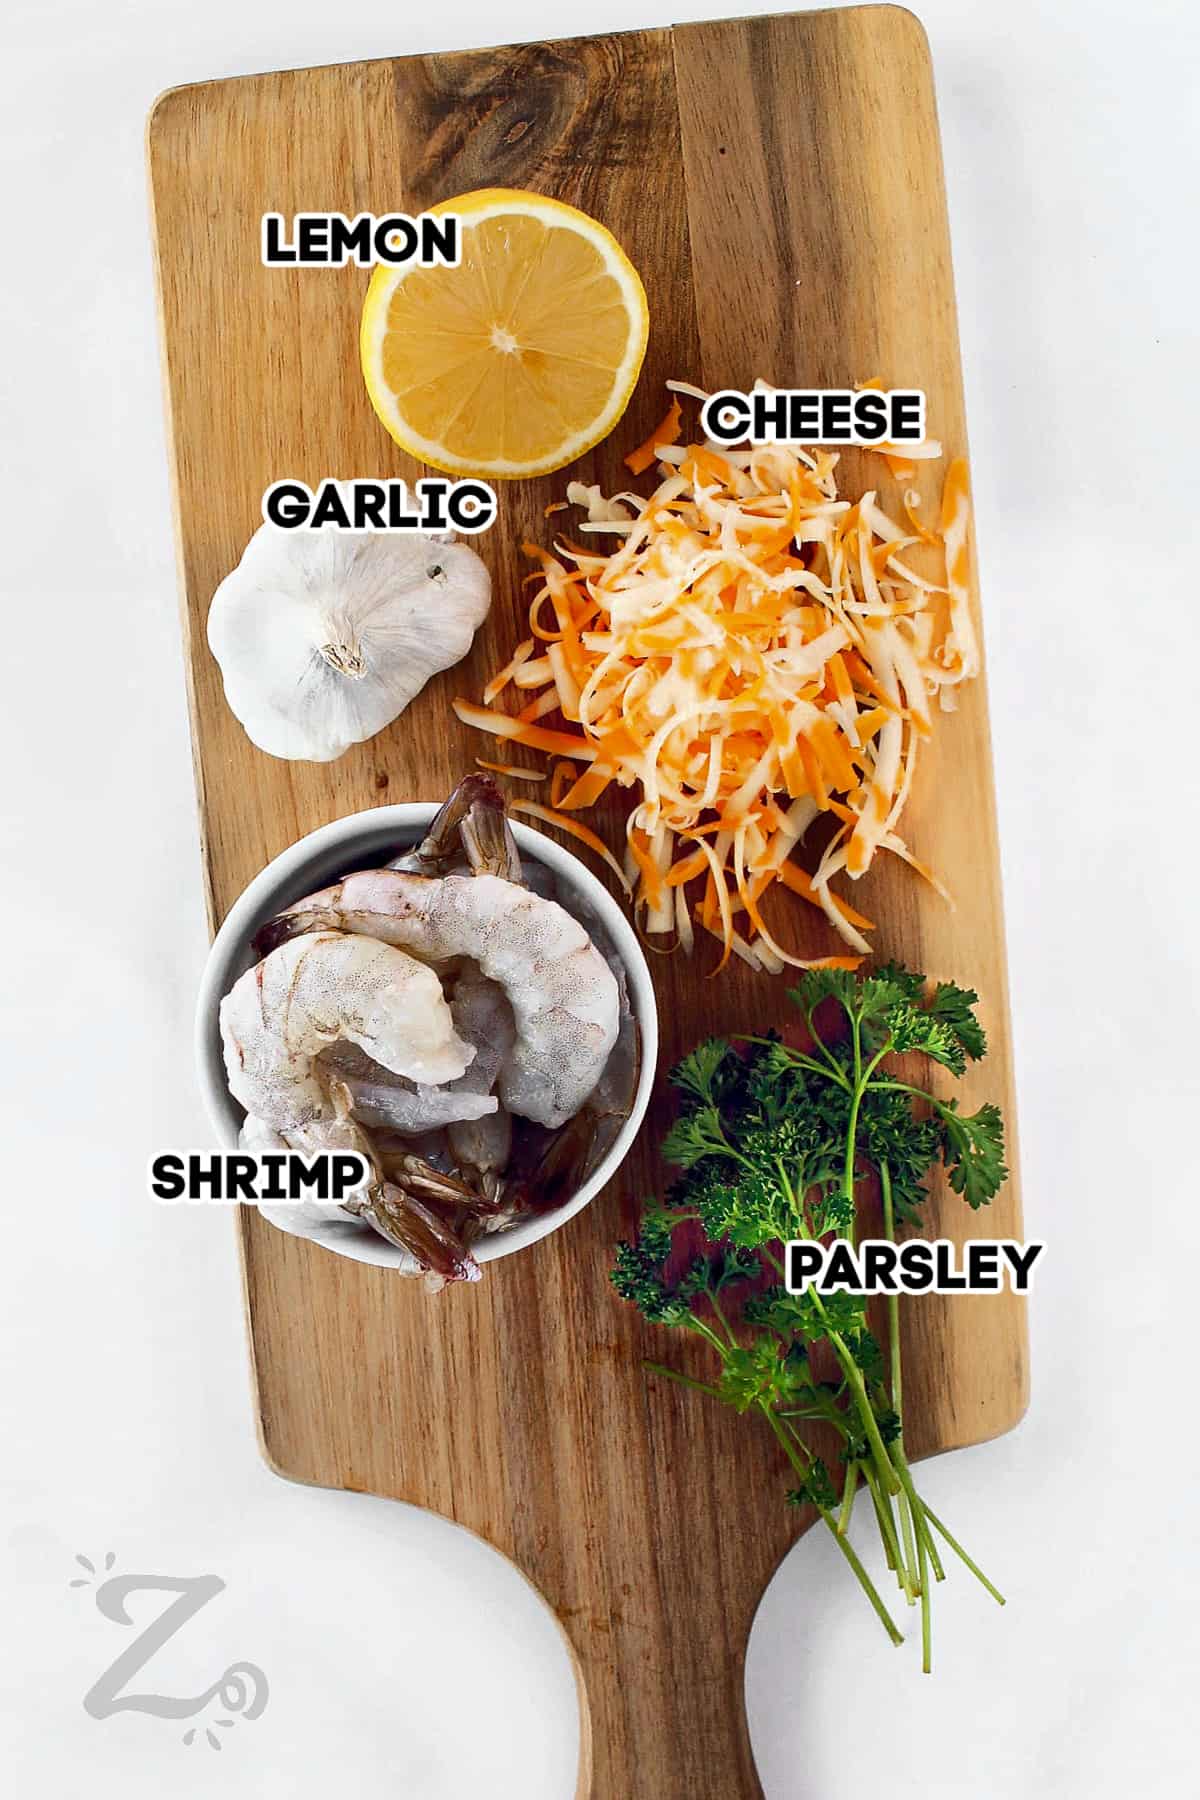 lemon, shredded cheese, garlic, fresh parsley and shrimp, assembled on a wooden board, ready to make cheesy garlic baked shrimp